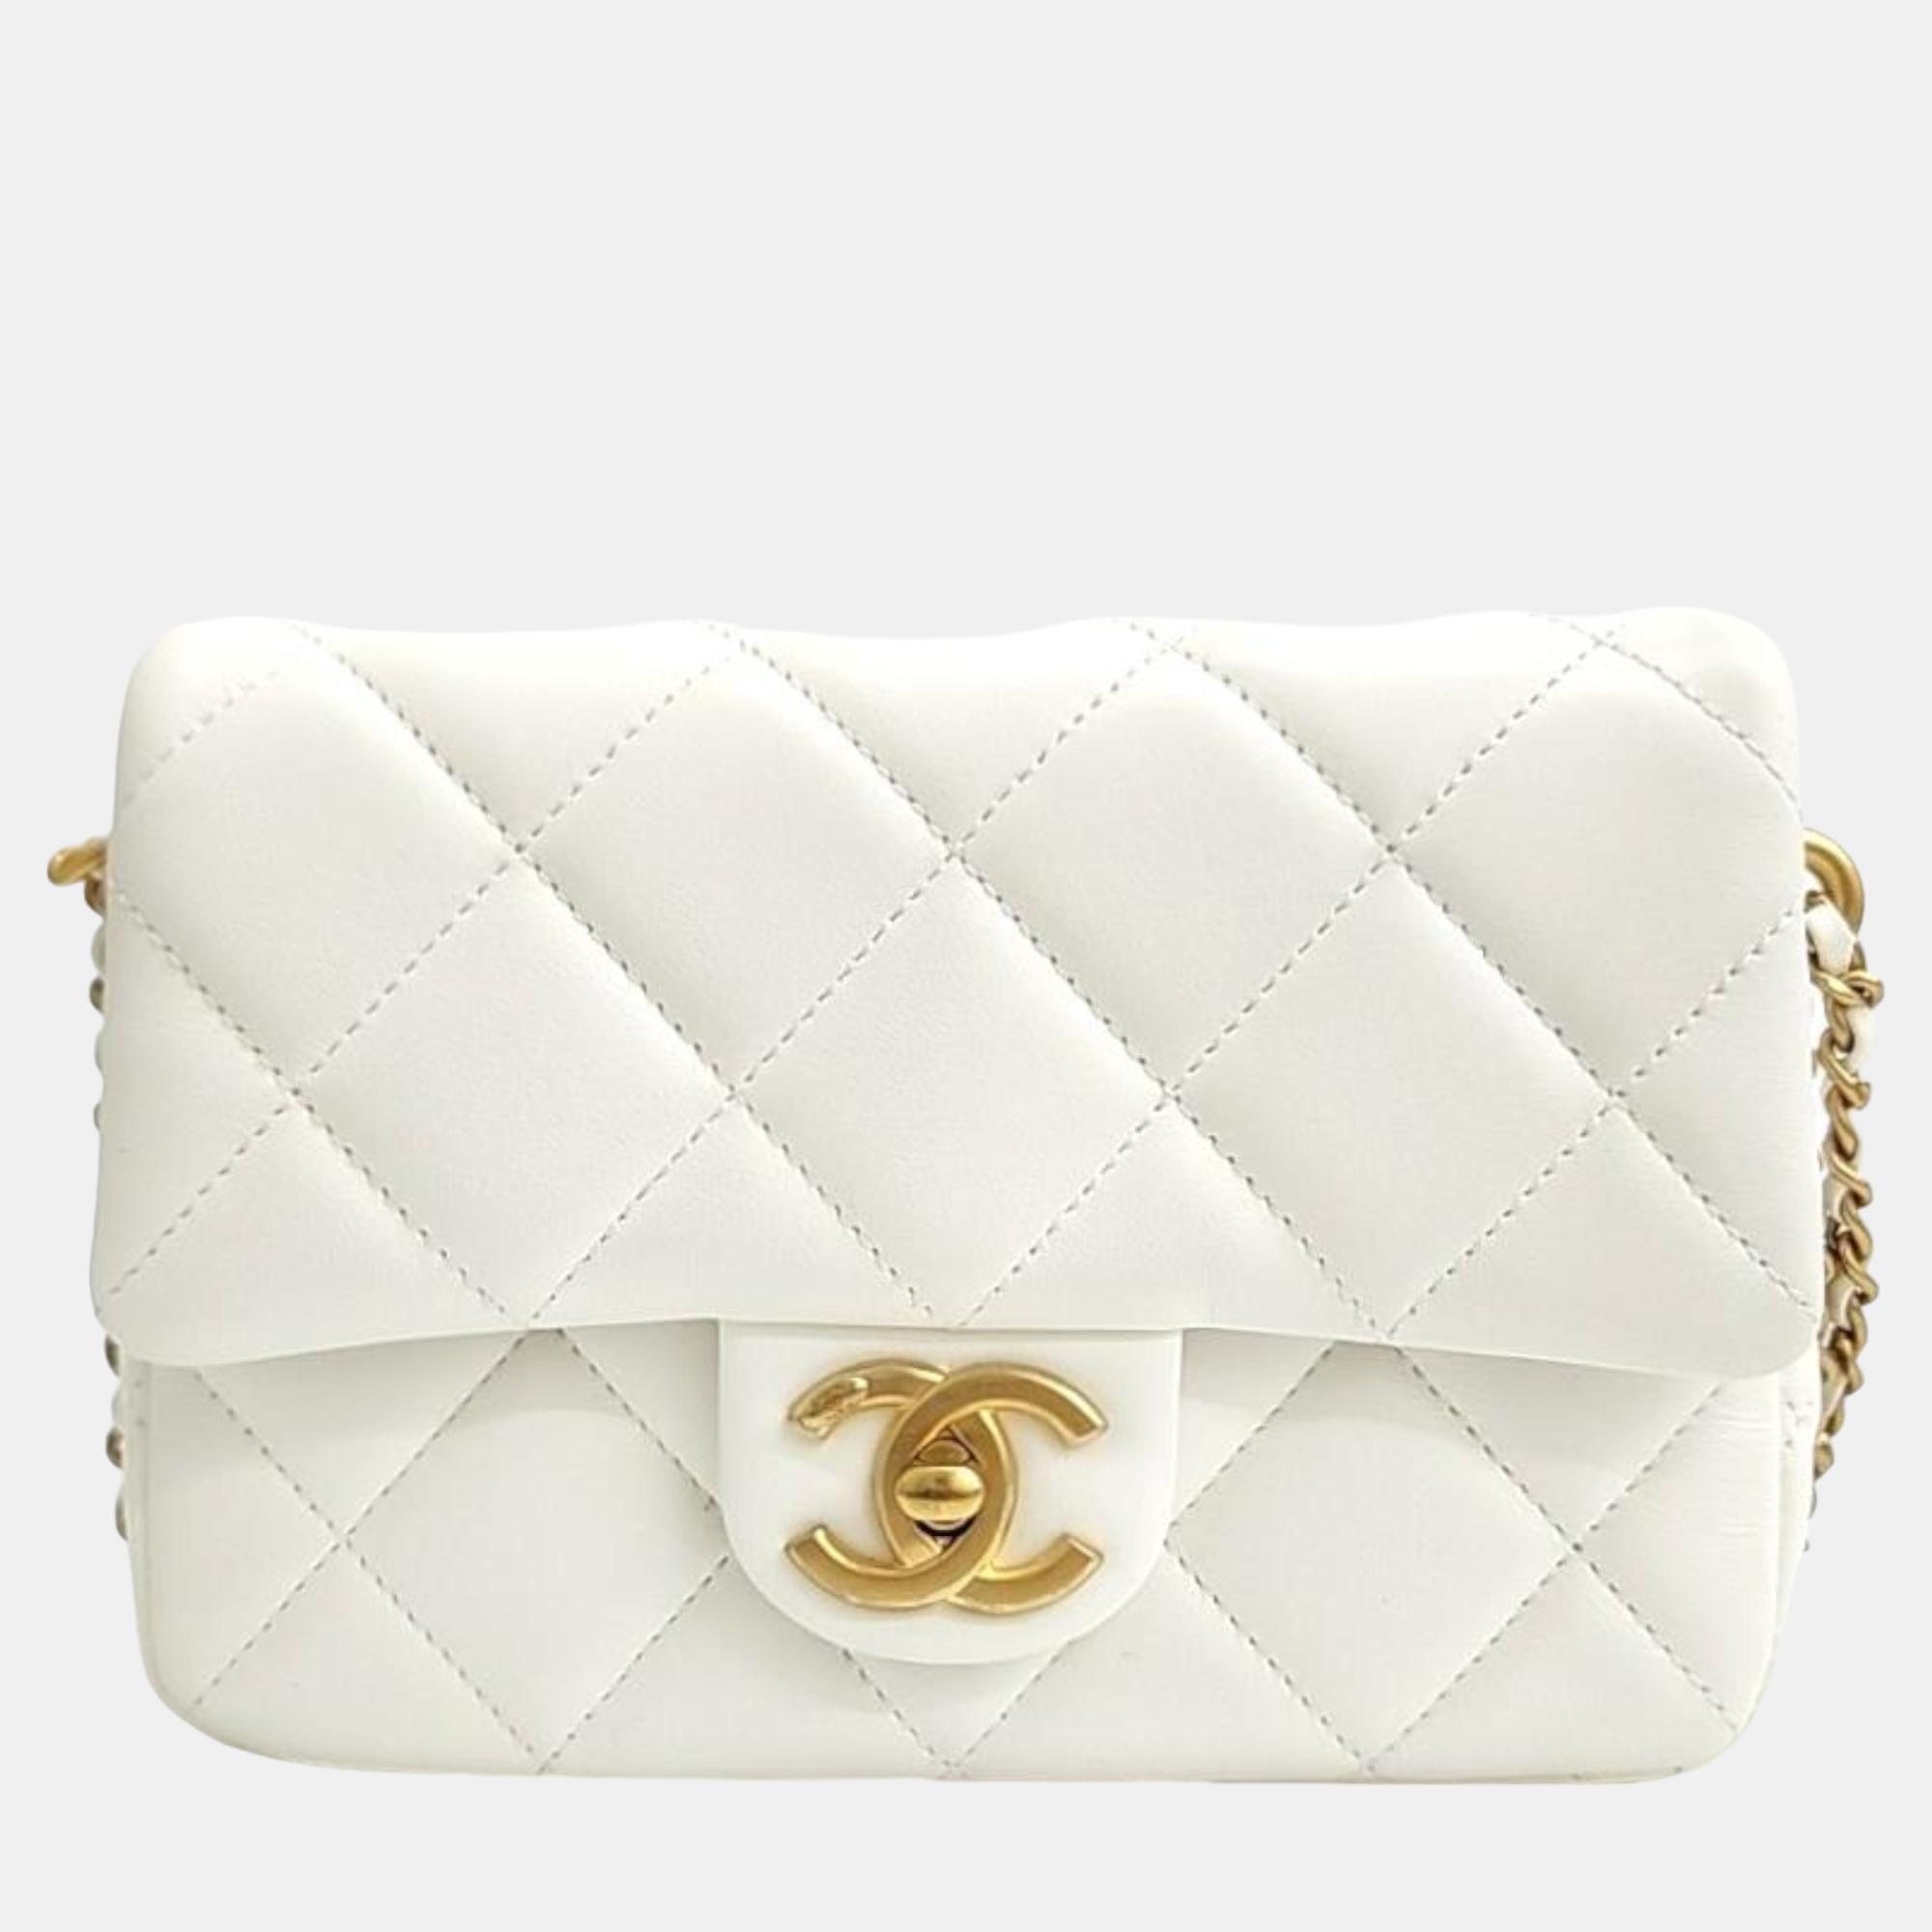 Chanel white leather my perfect mini crossbody bag